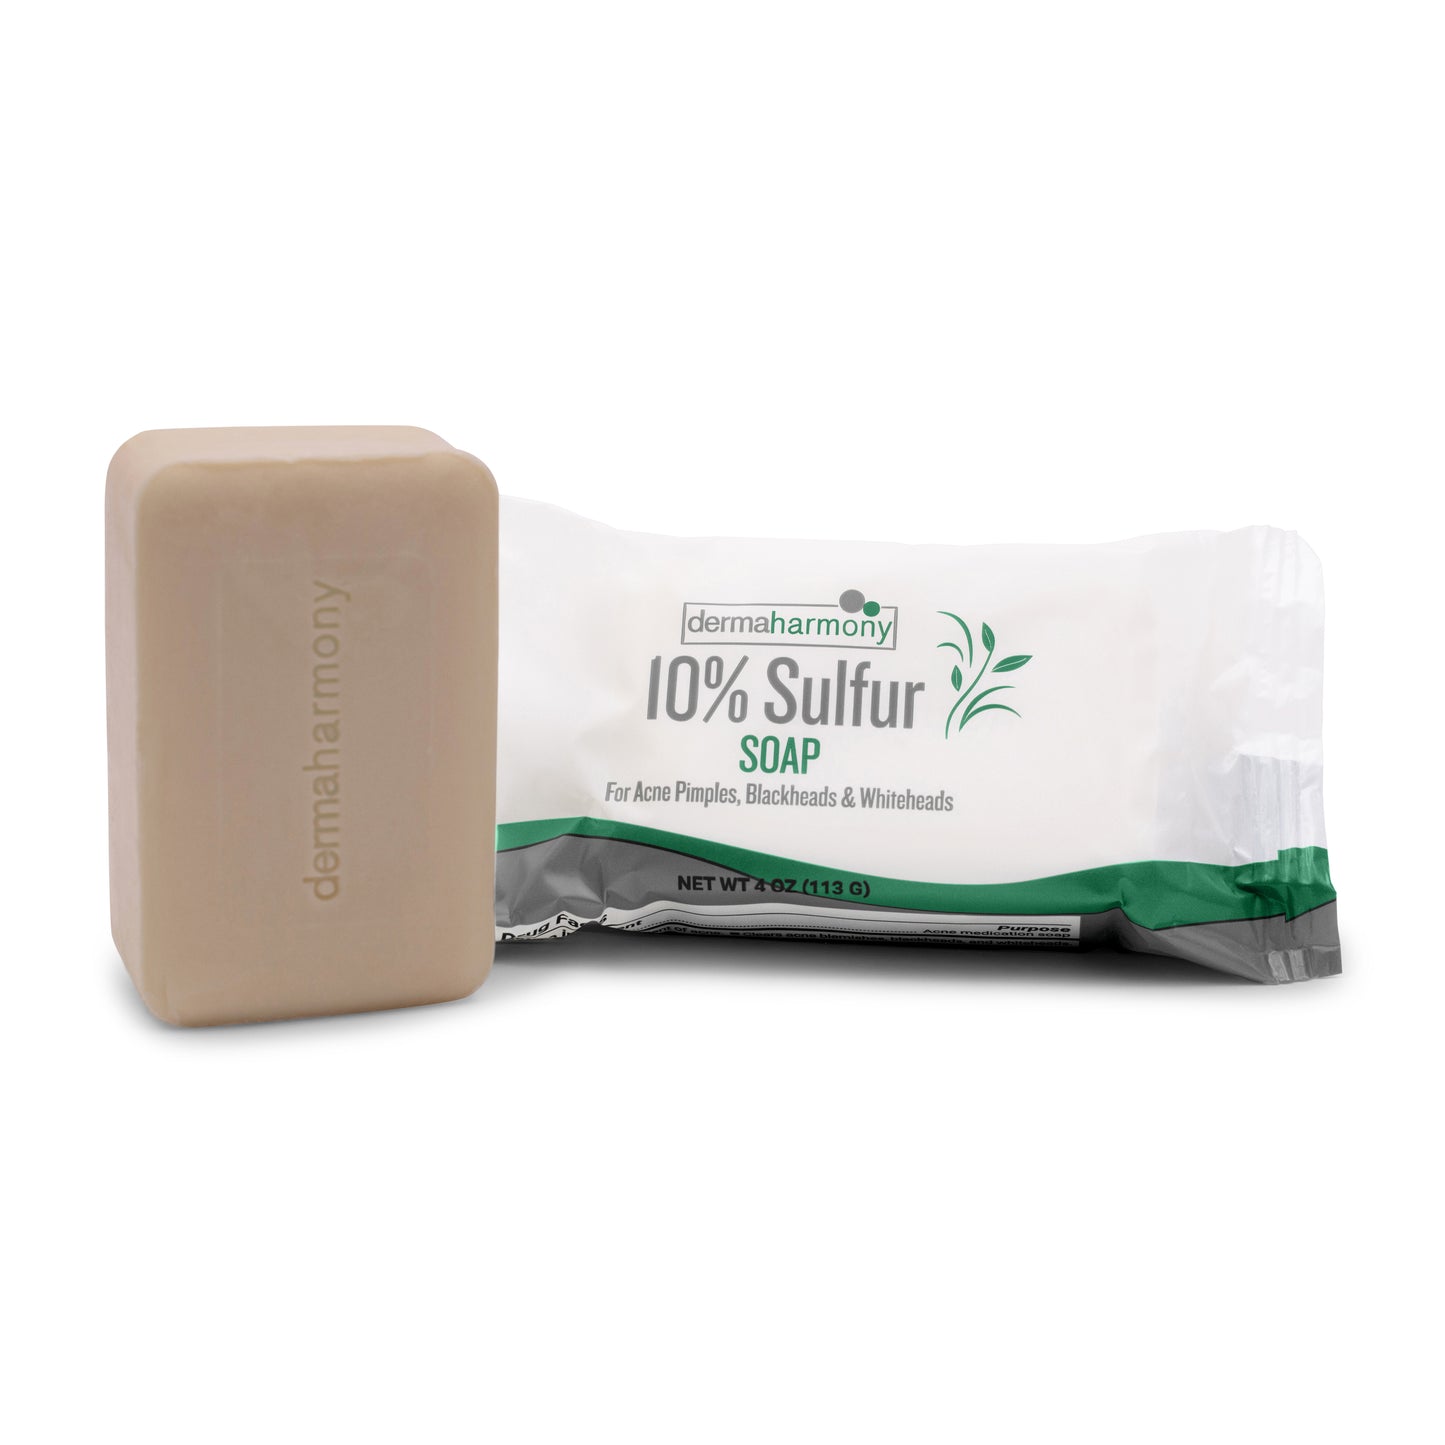 10% Sulfur with Tea Tree Oil Bar Soap